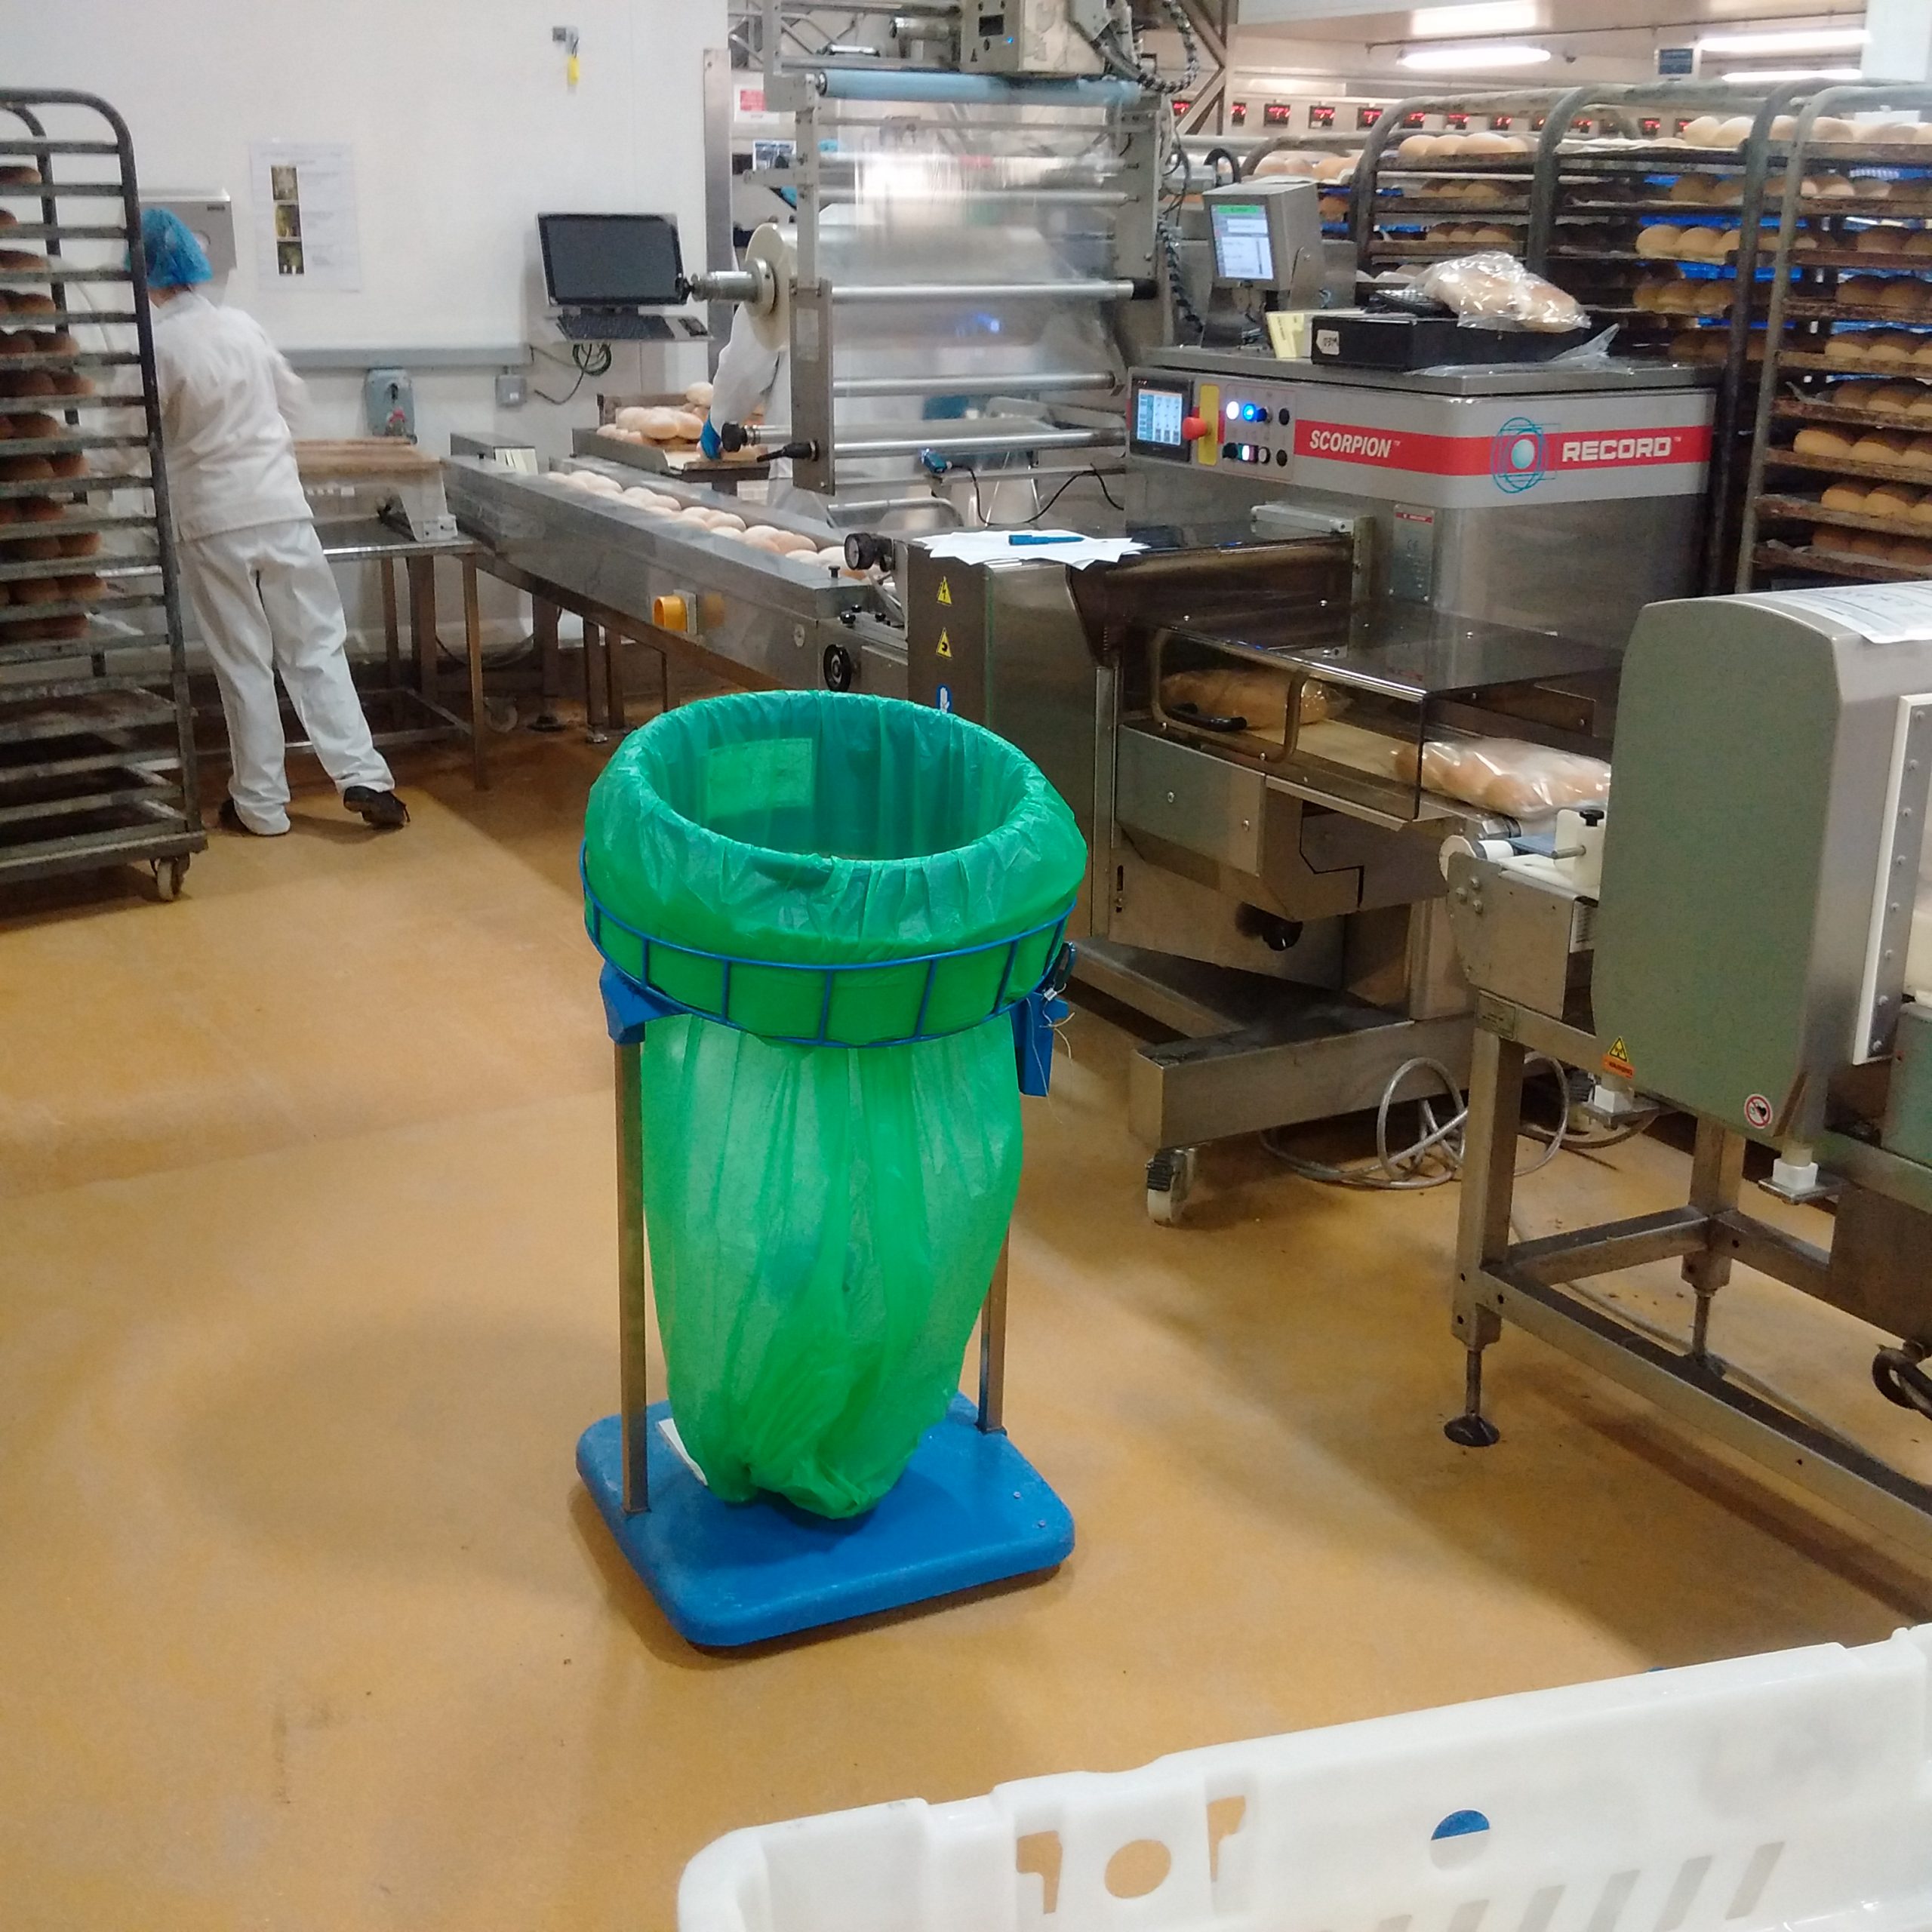 bakery retailer reducing plastic and carbon footprint